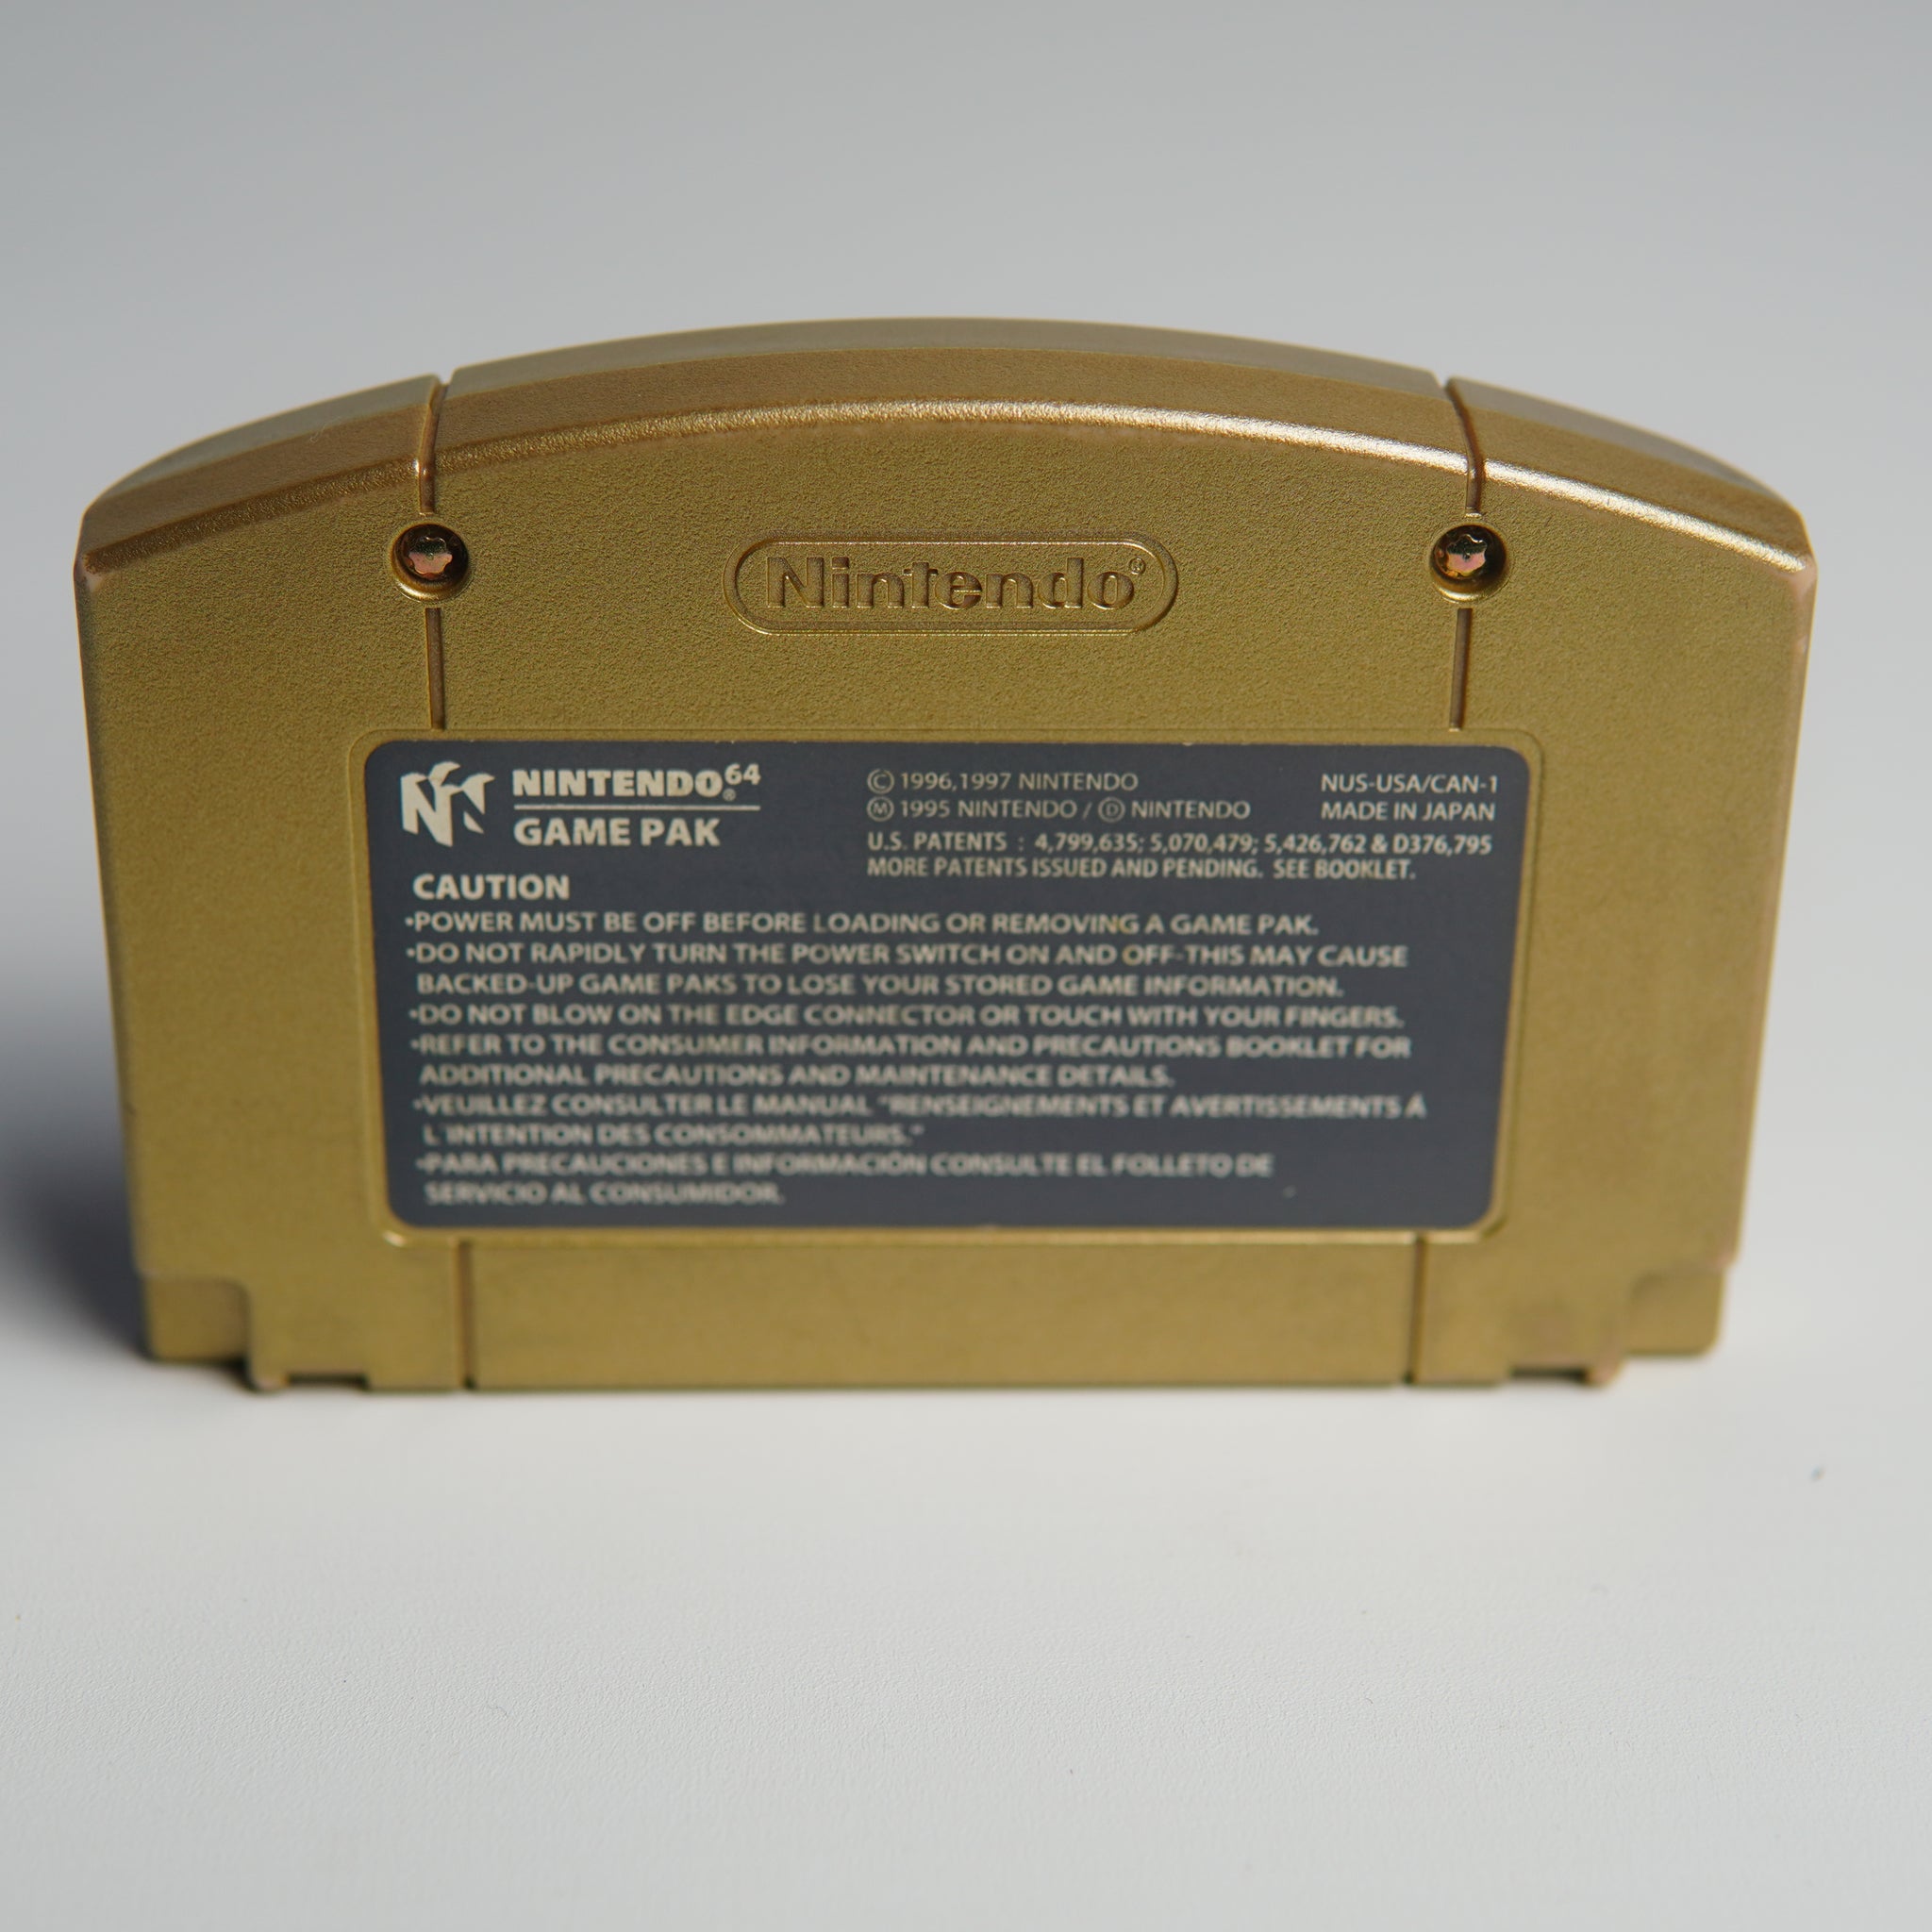 New N64 Games Cartridge The Legend of Zelda Ocarina of Time Master